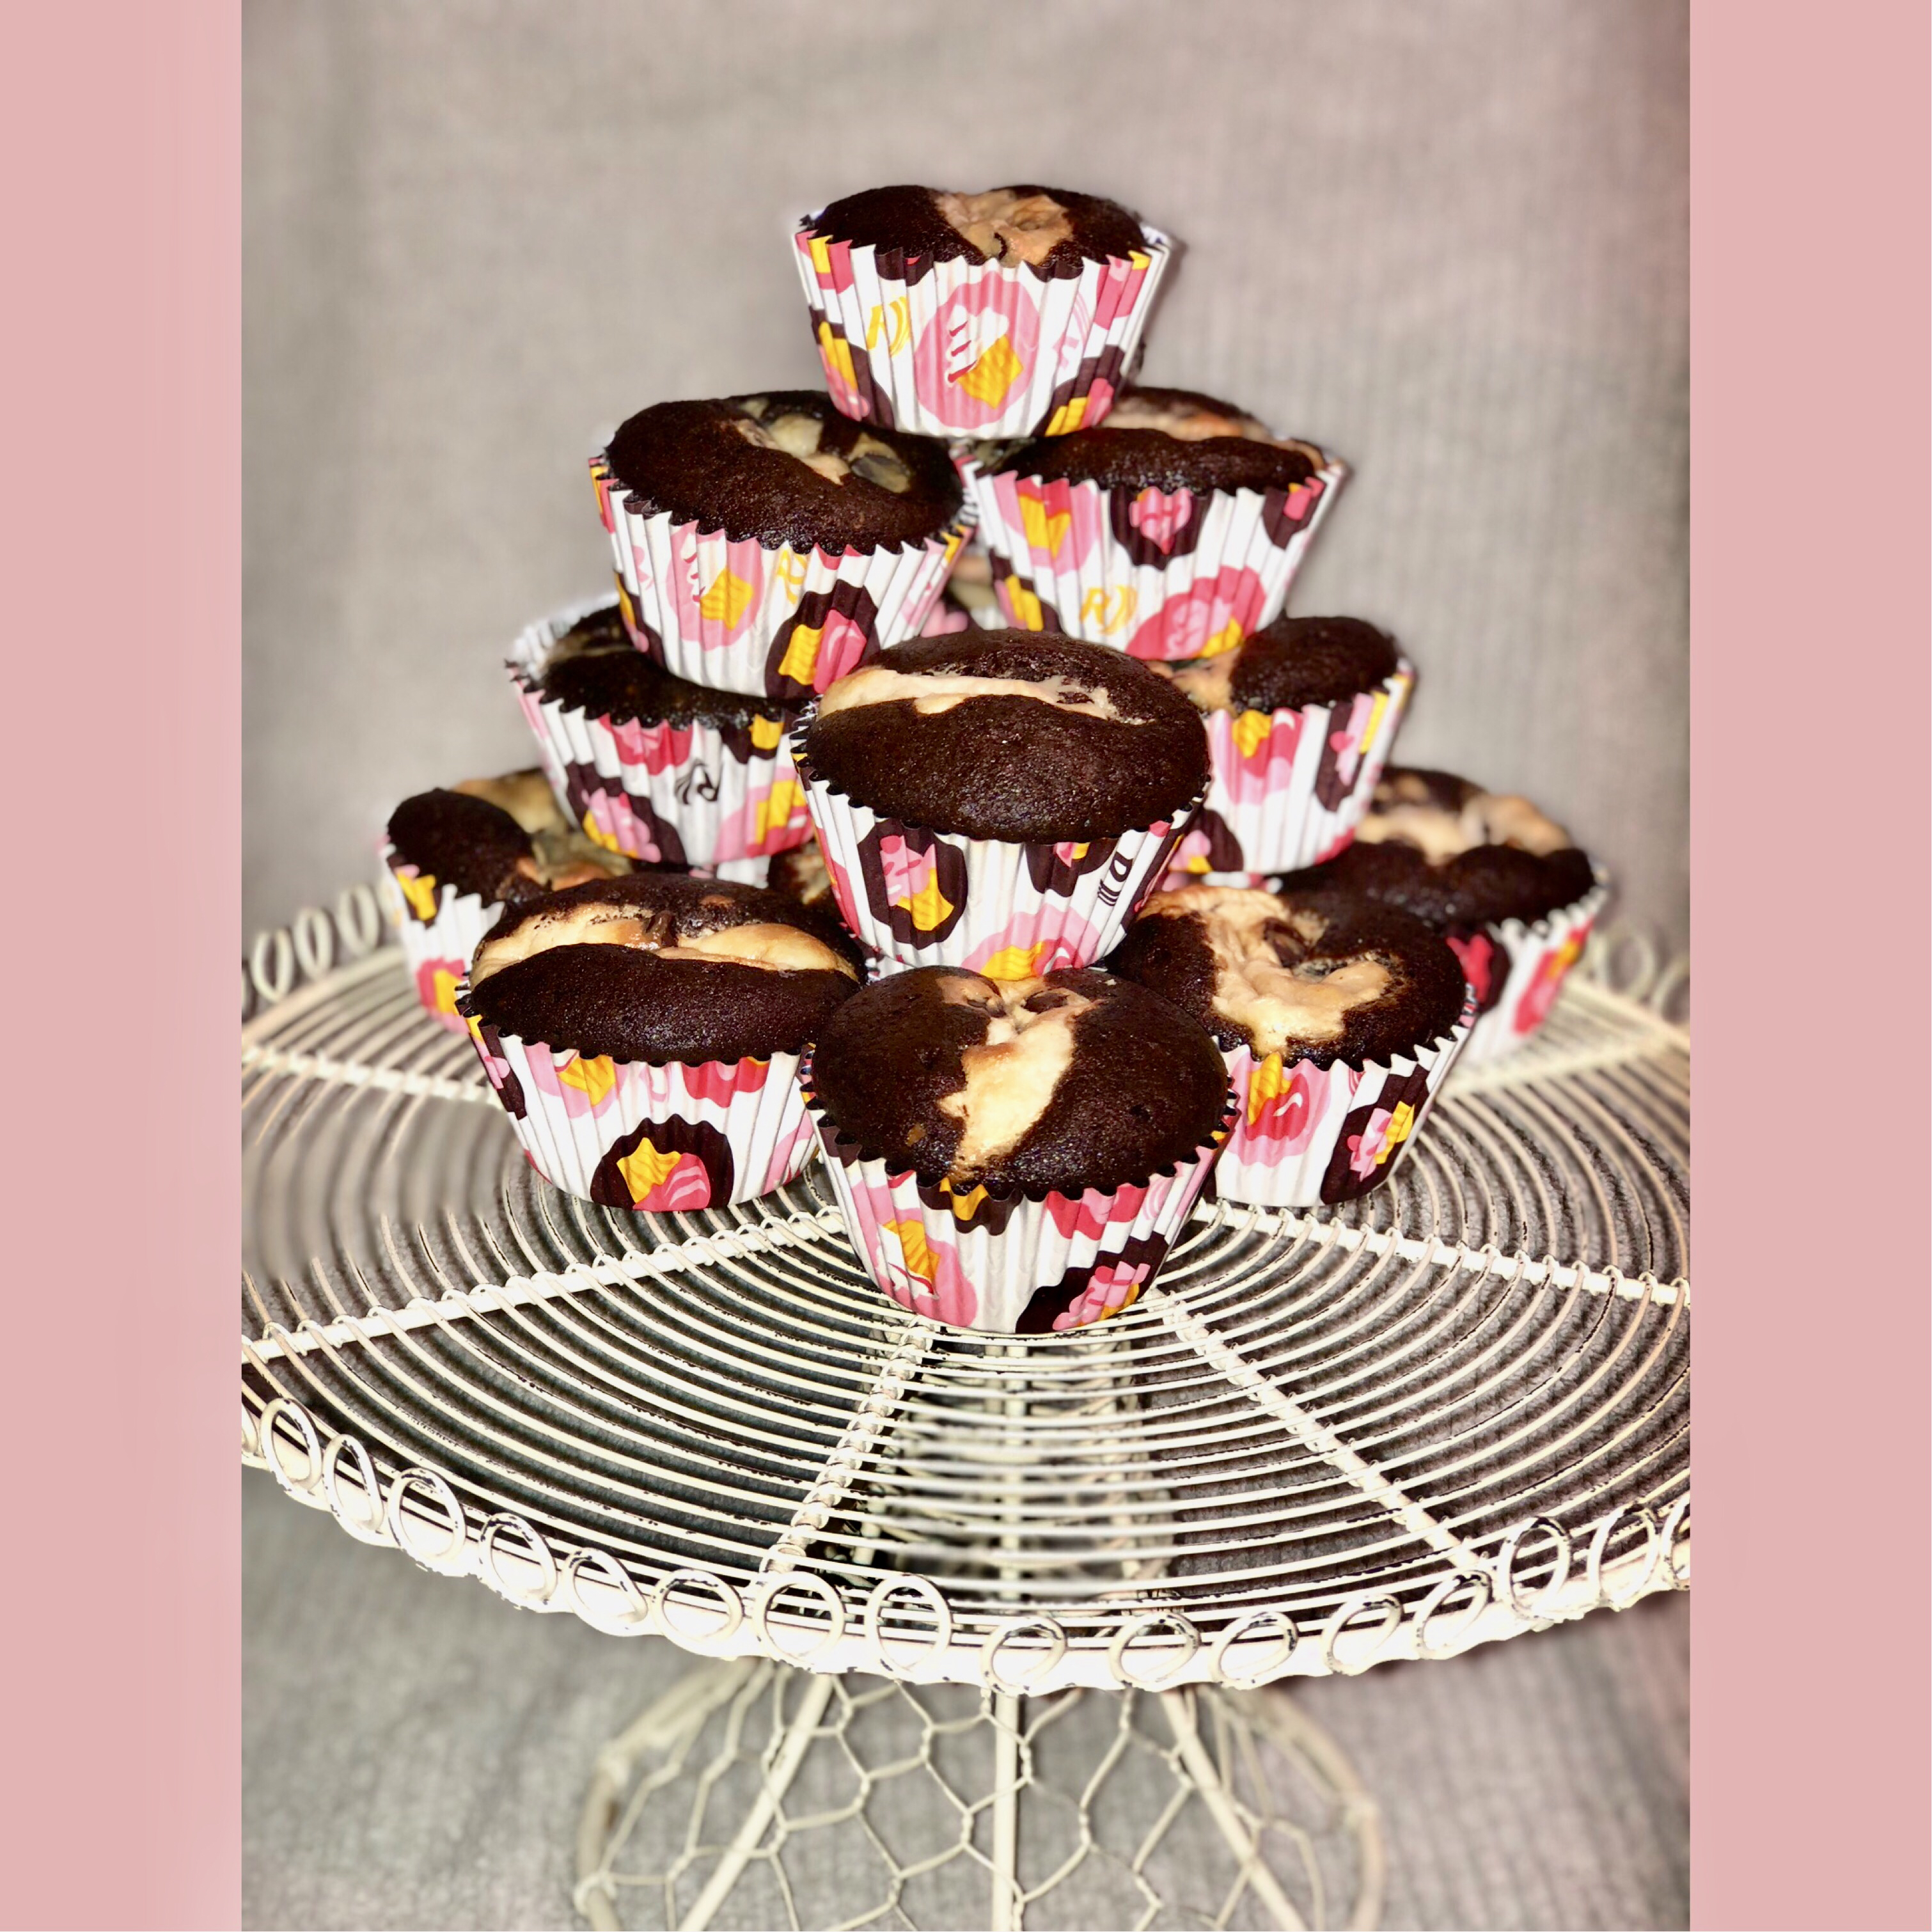 Grandma Gudgel's Black Bottom Cupcakes hailere